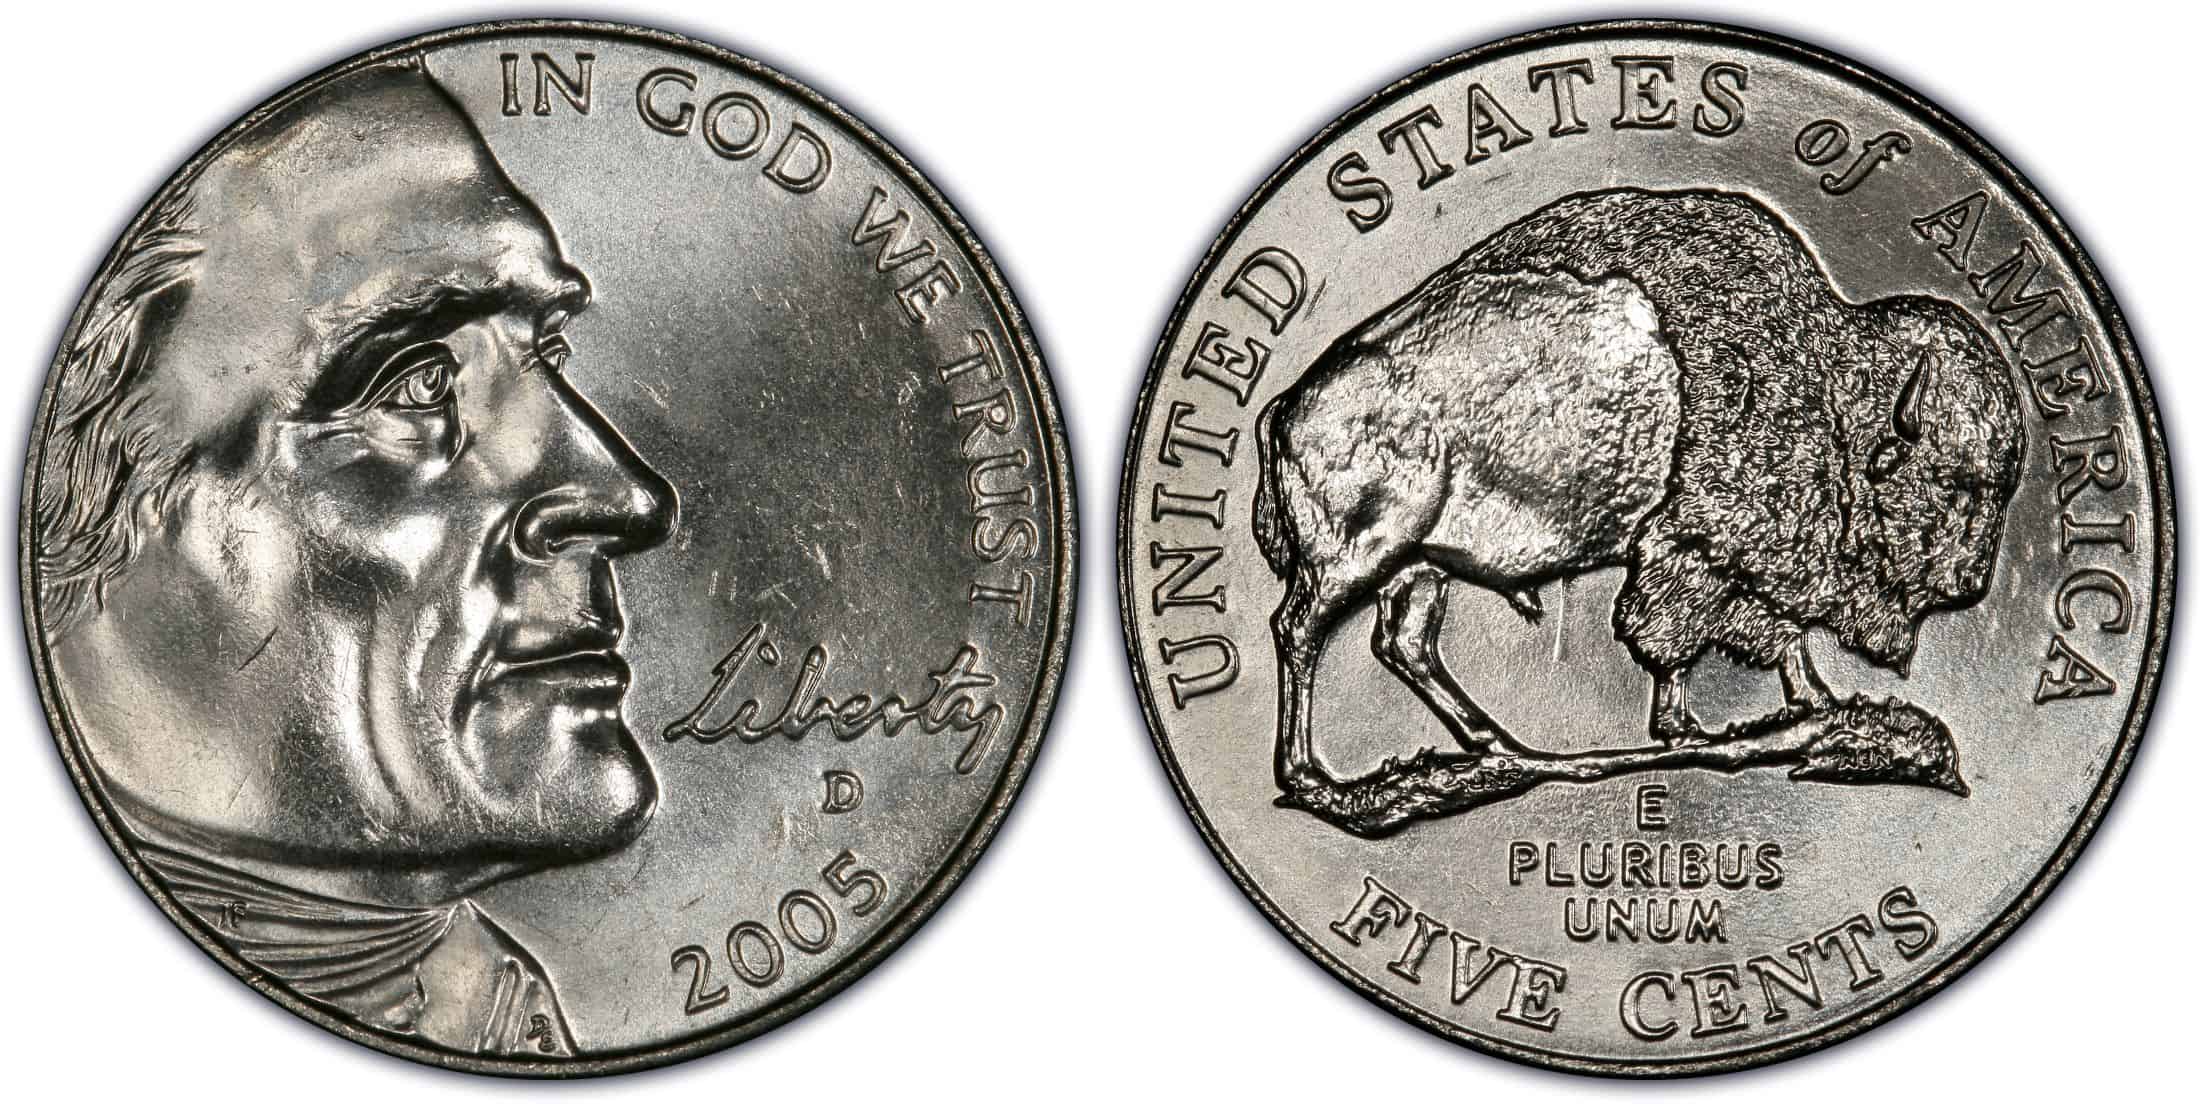 2005 D Buffalo nickel